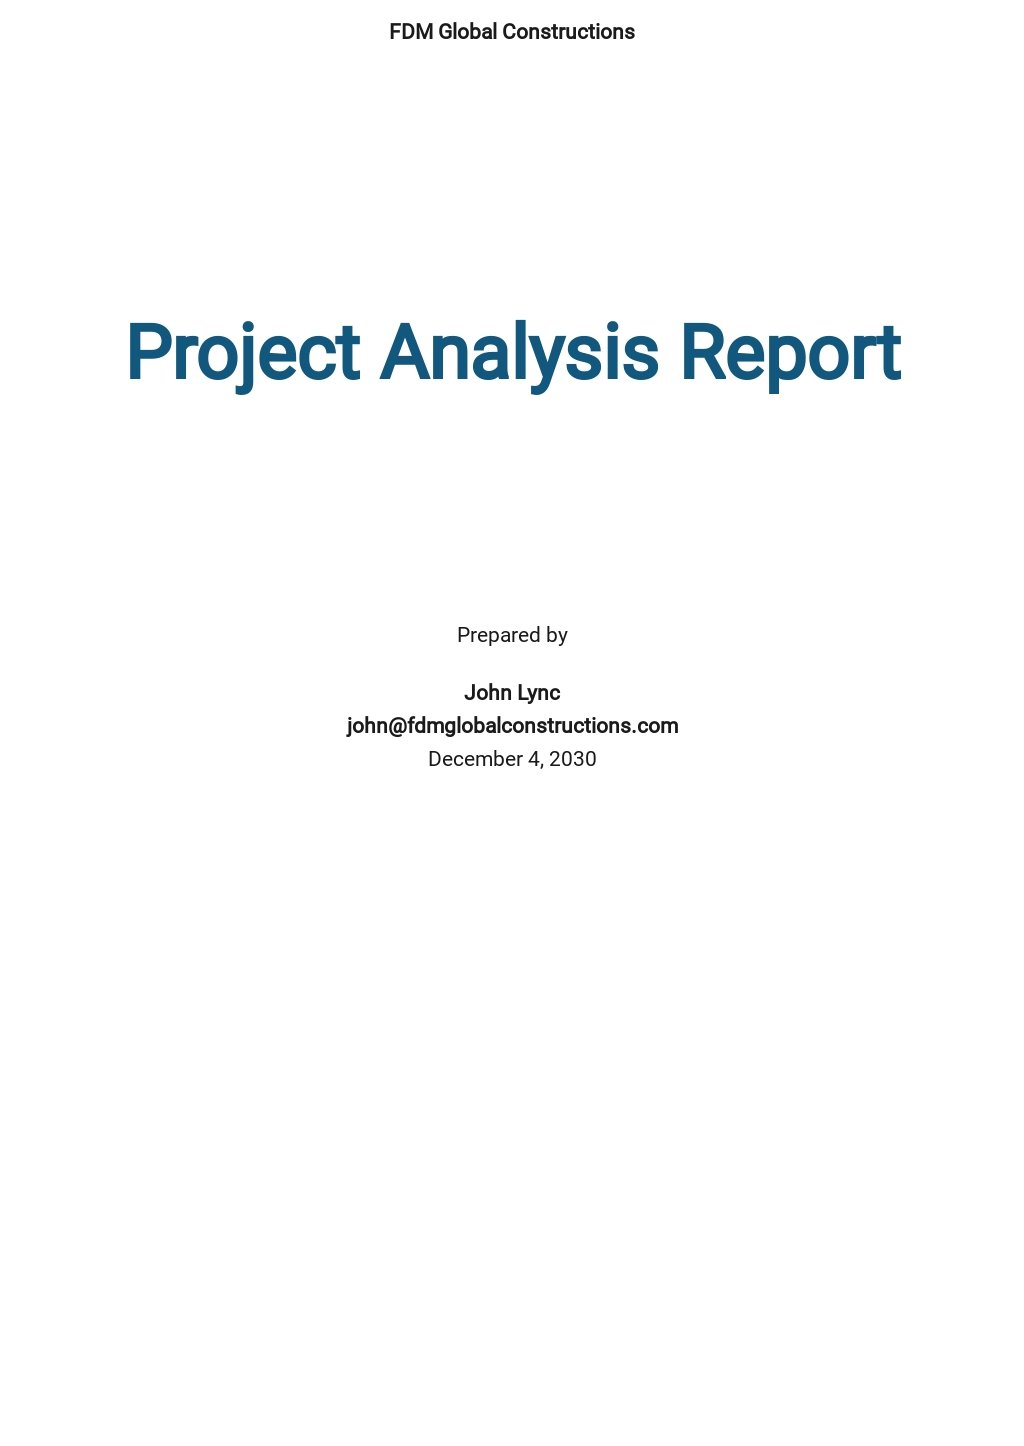 Project Analysis Report Template - Google Docs, Word  Template.net With Project Analysis Report Template